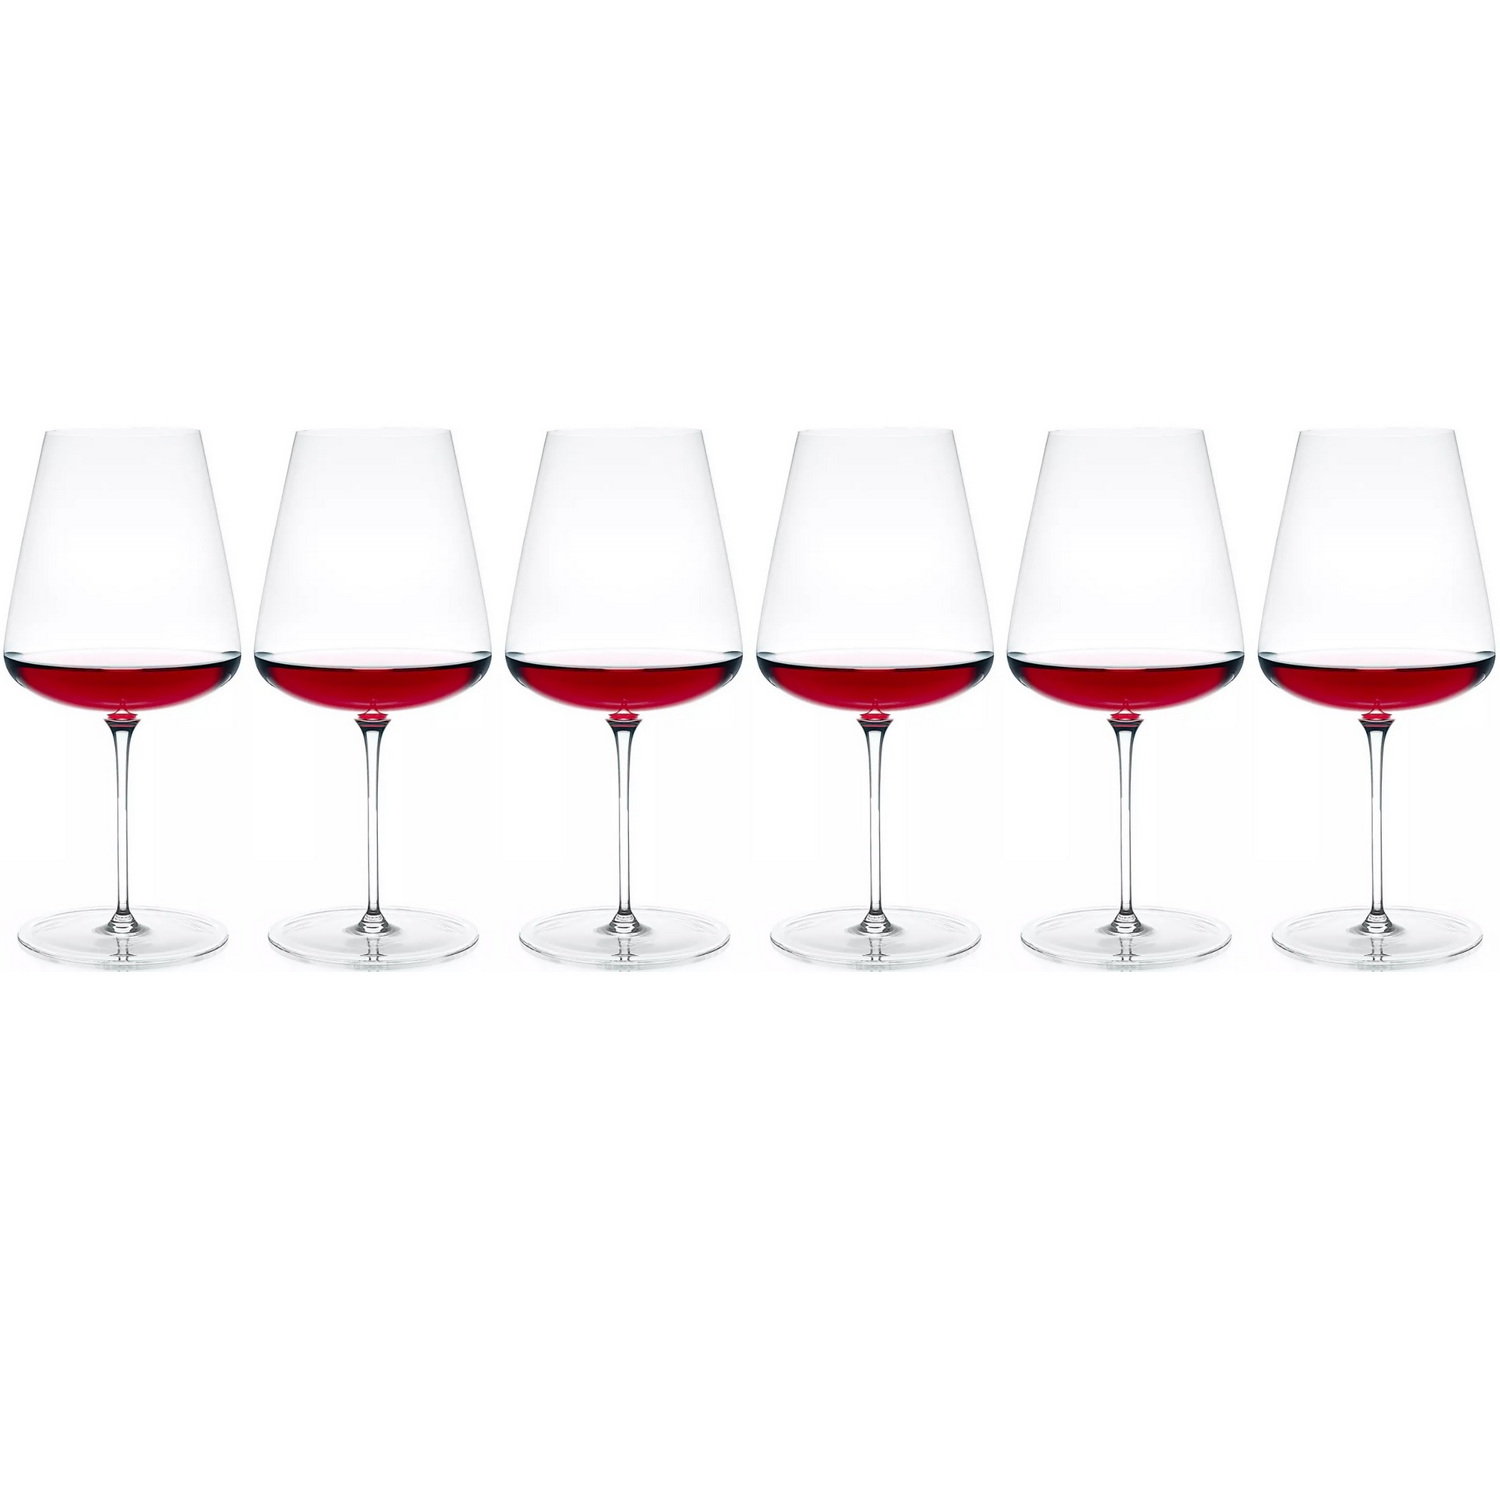 6 бокалов для красного вина Grassl Vigneron 1855-6 760 мл